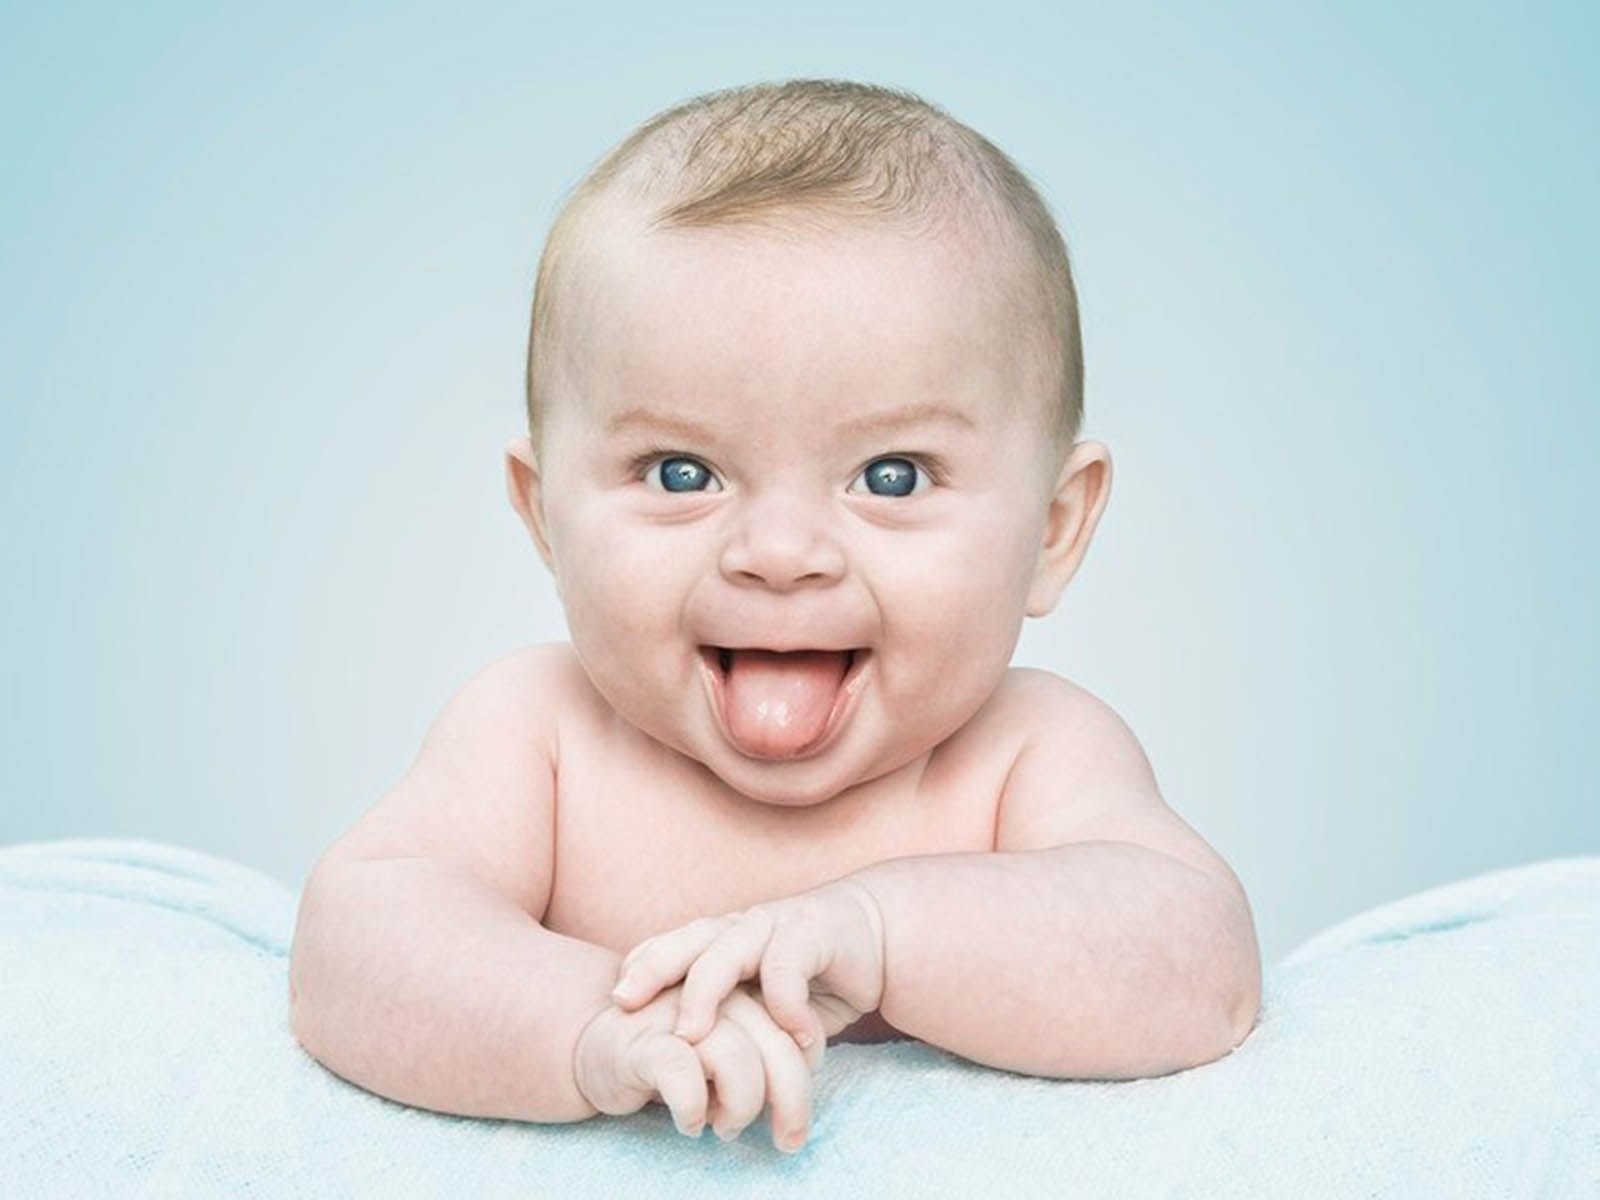 Babies Wallpaper. Free Download Wallpaper. DaWallpaperz. Cute baby wallpaper, Funny babies, Baby pic wallpaper